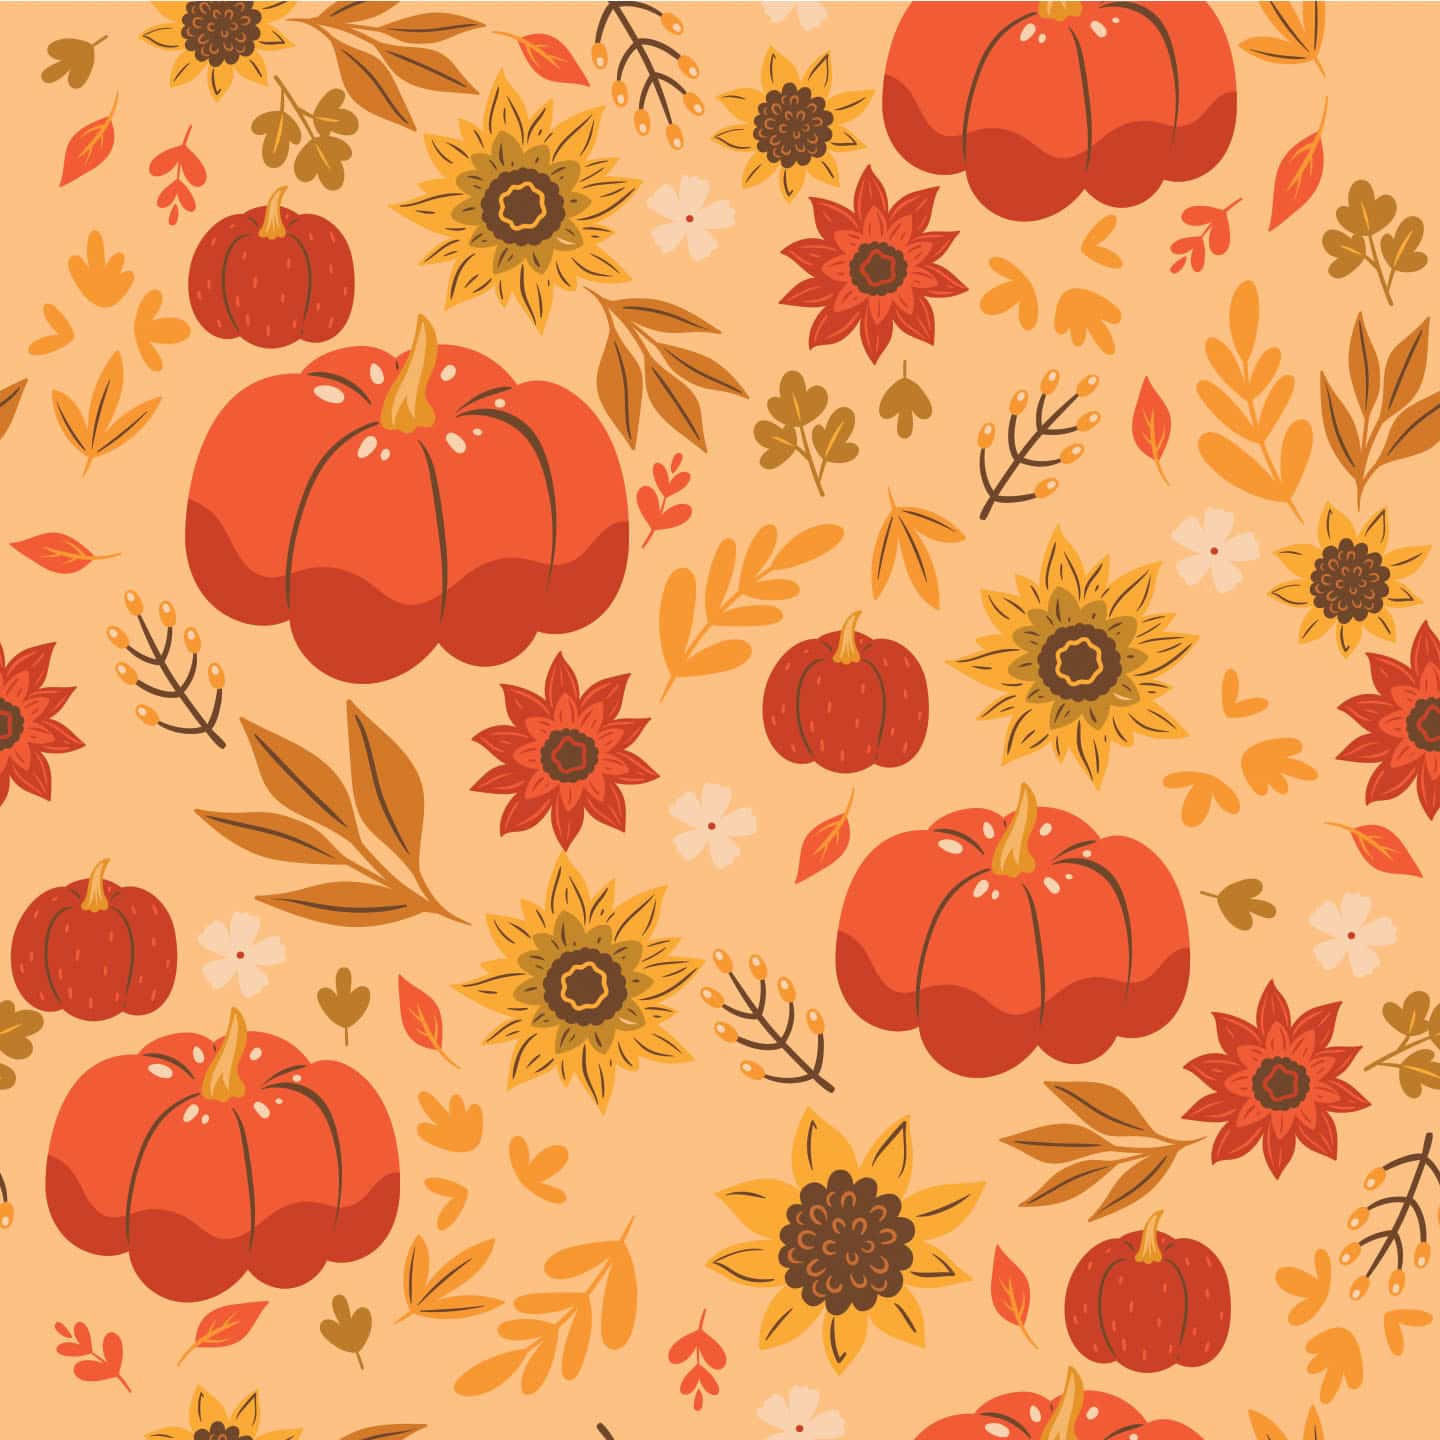 autumn peel and stick wallpaper